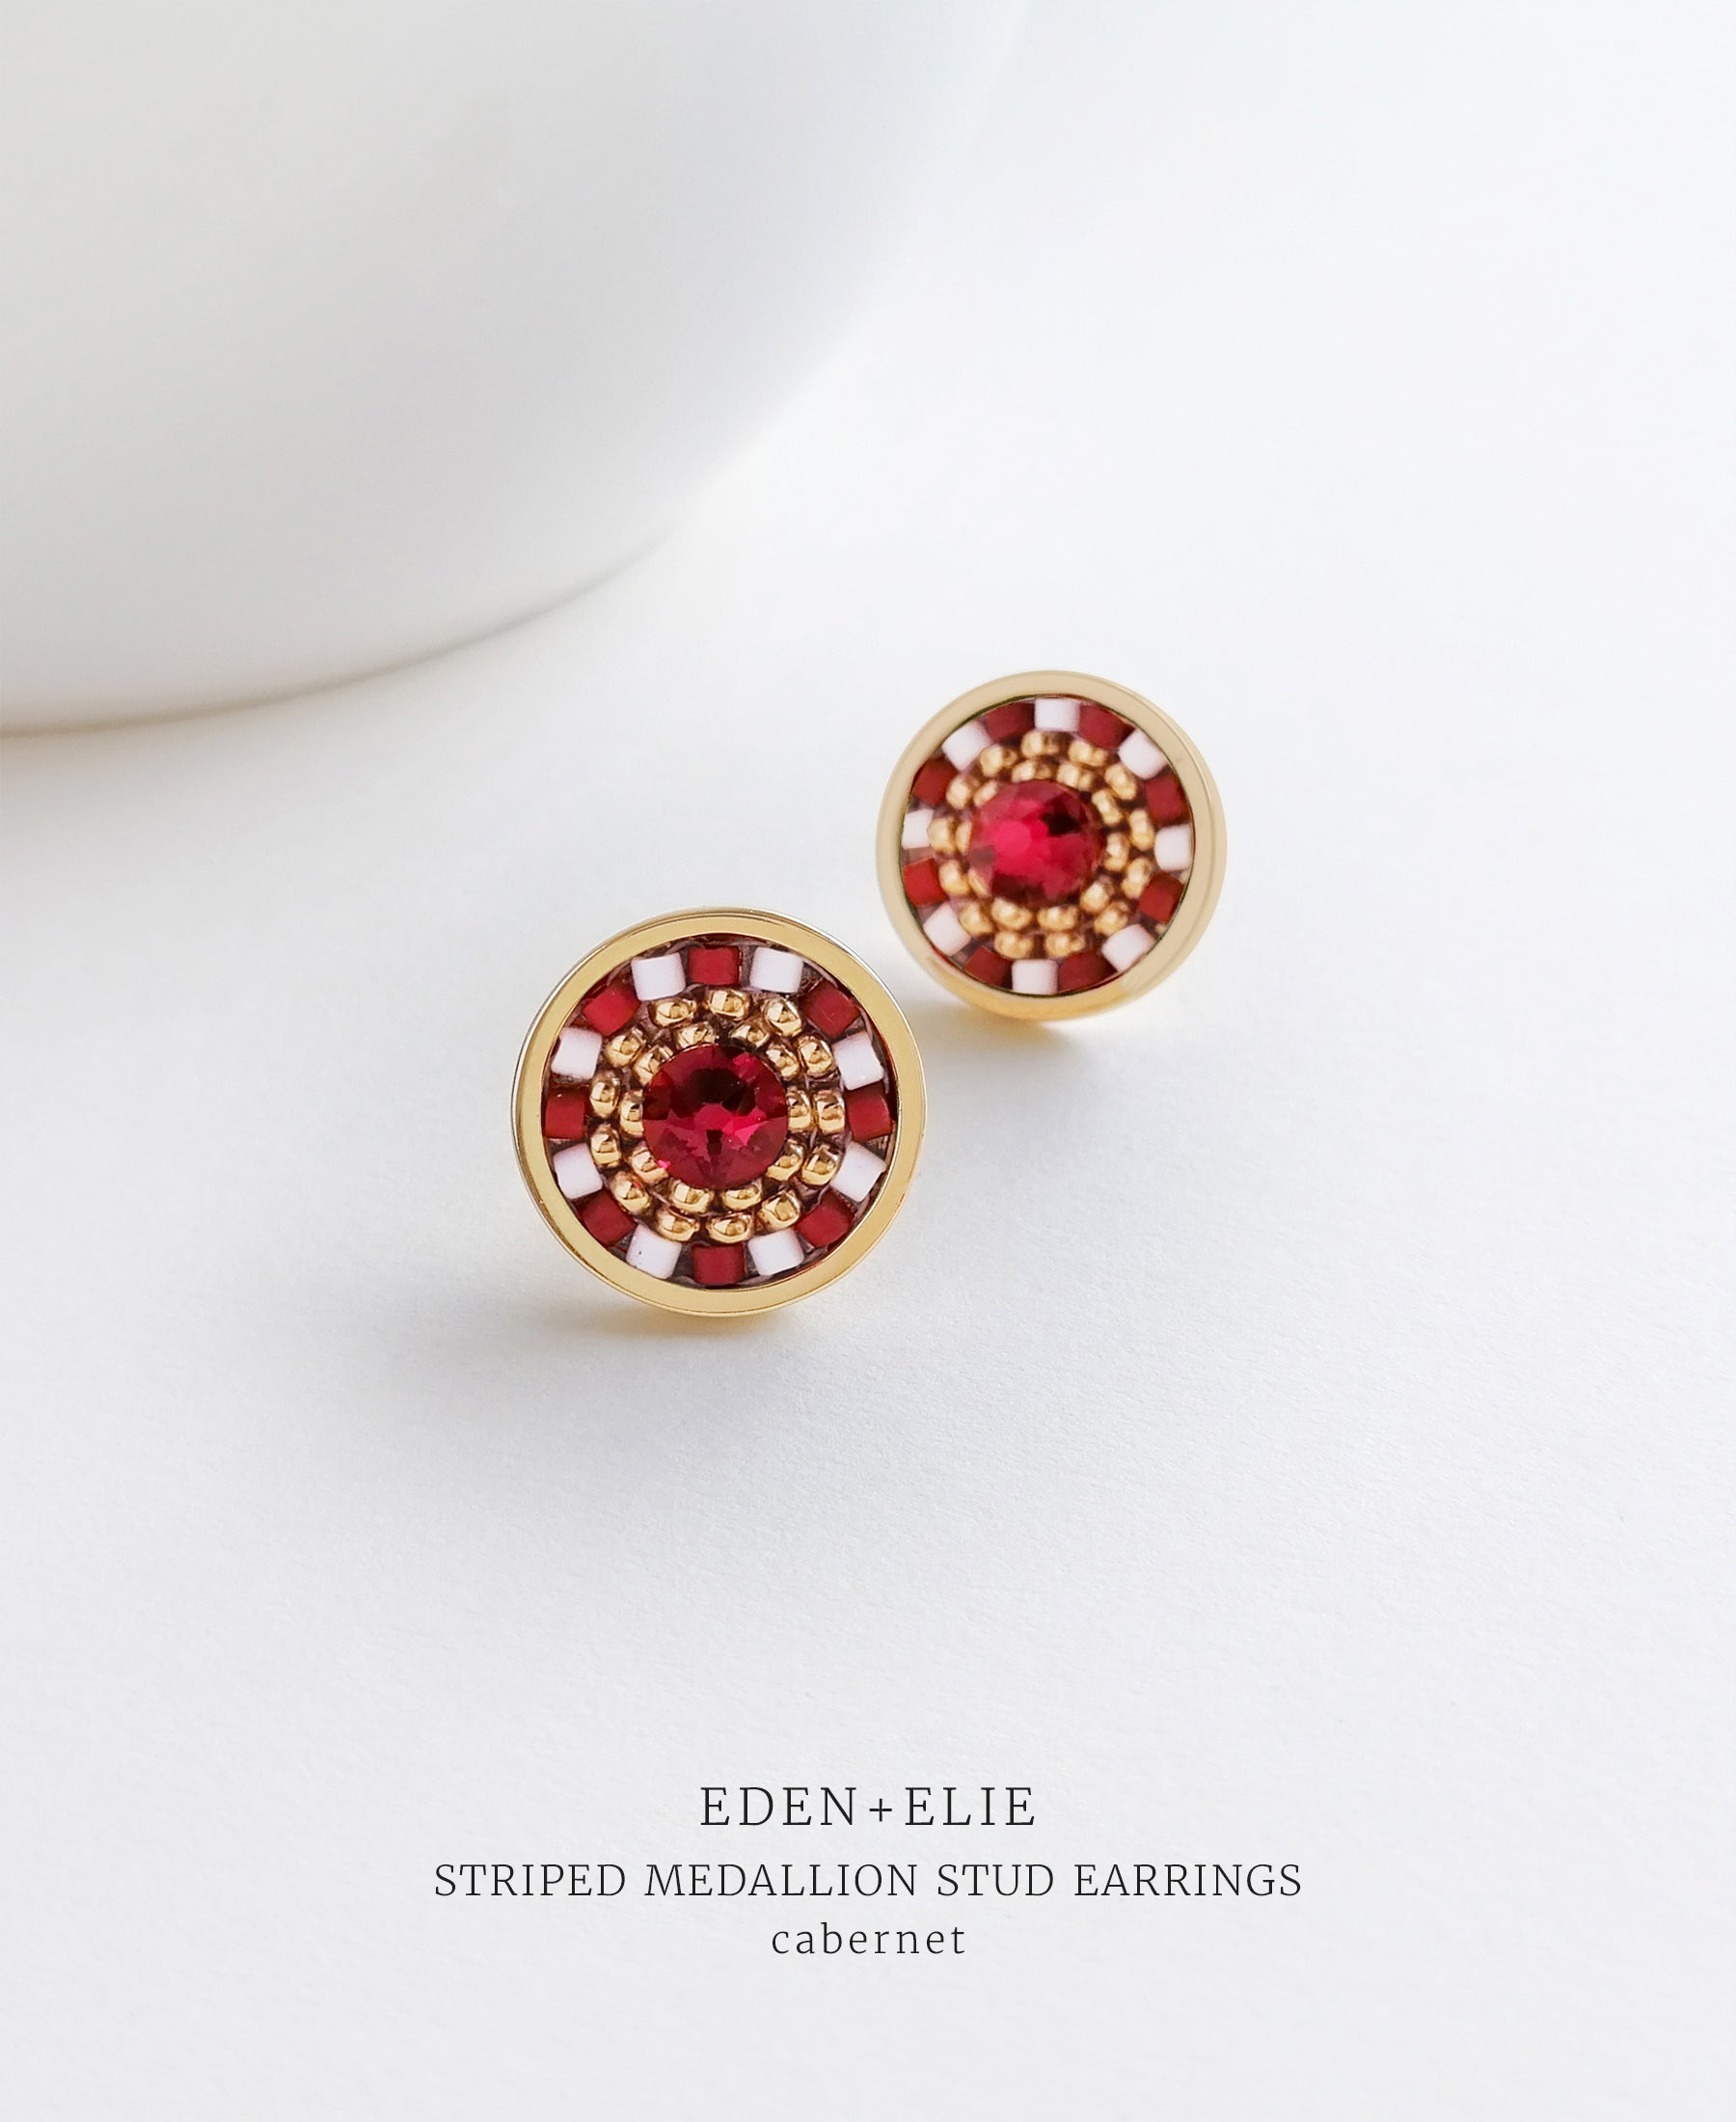 EDEN + ELIE Striped Medallion stud earrings - cabernet